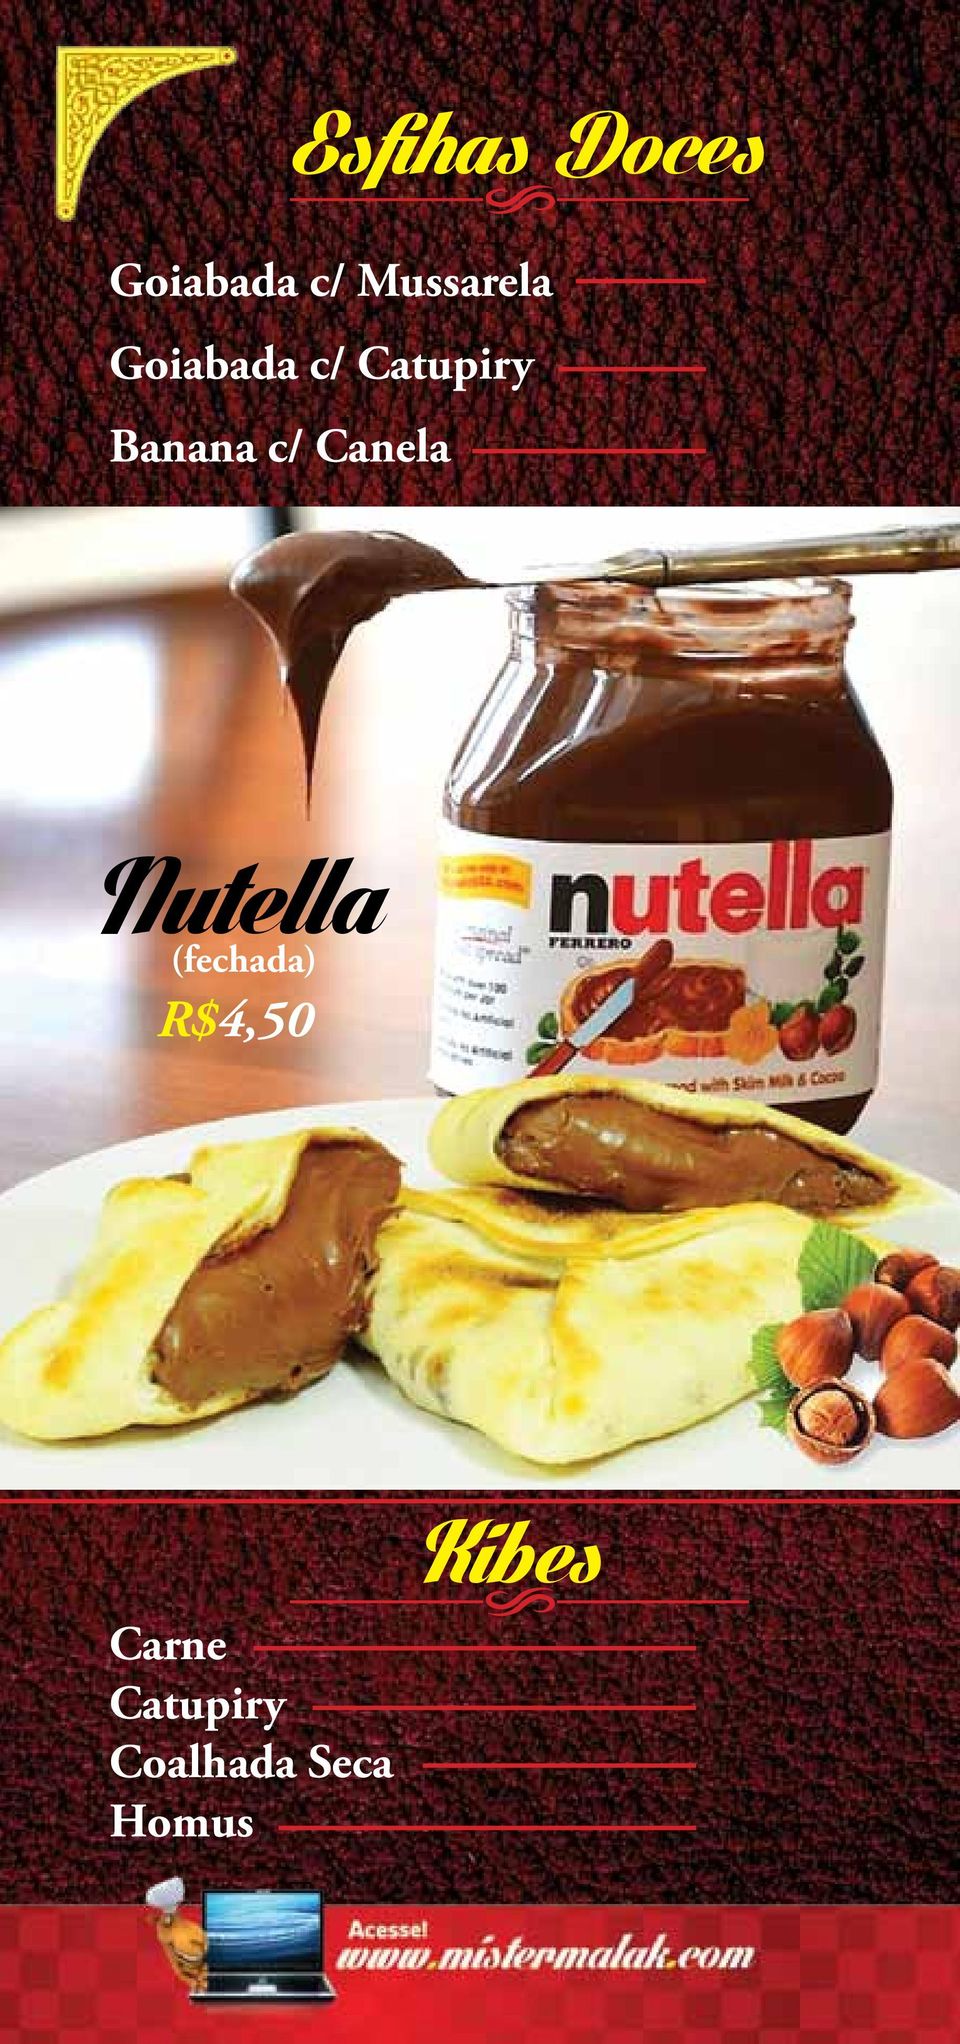 Doces Nutella (fechada) R$4,50